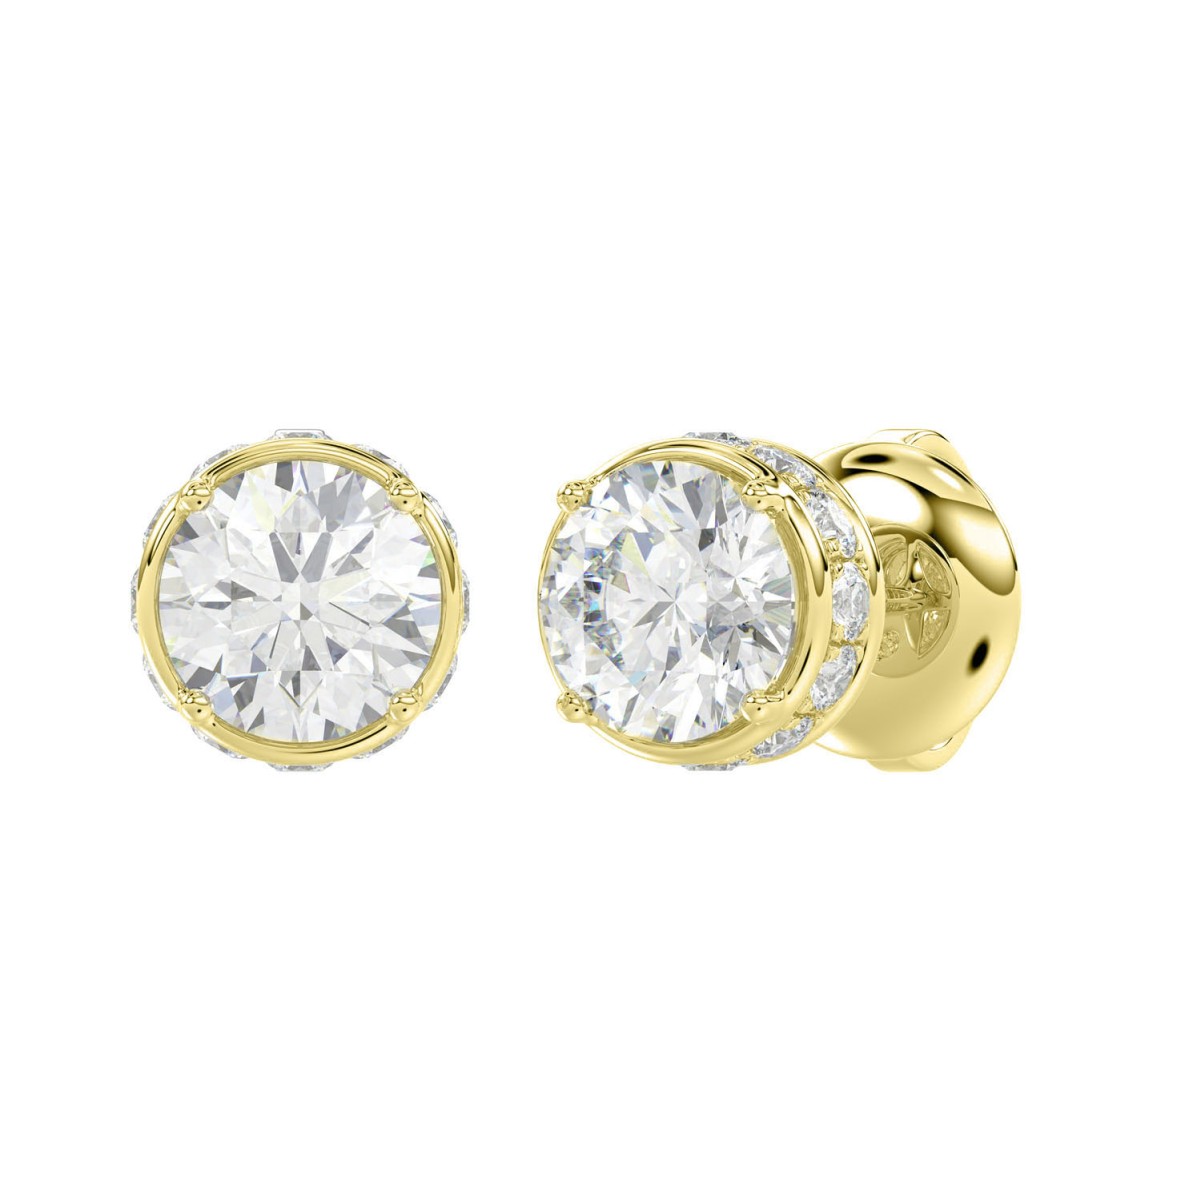 18K YELLOW GOLD 1CT ROUND DIAMOND LADIES EARRINGS(CENTER STONE ROUND DIAMOND 7/8CT)